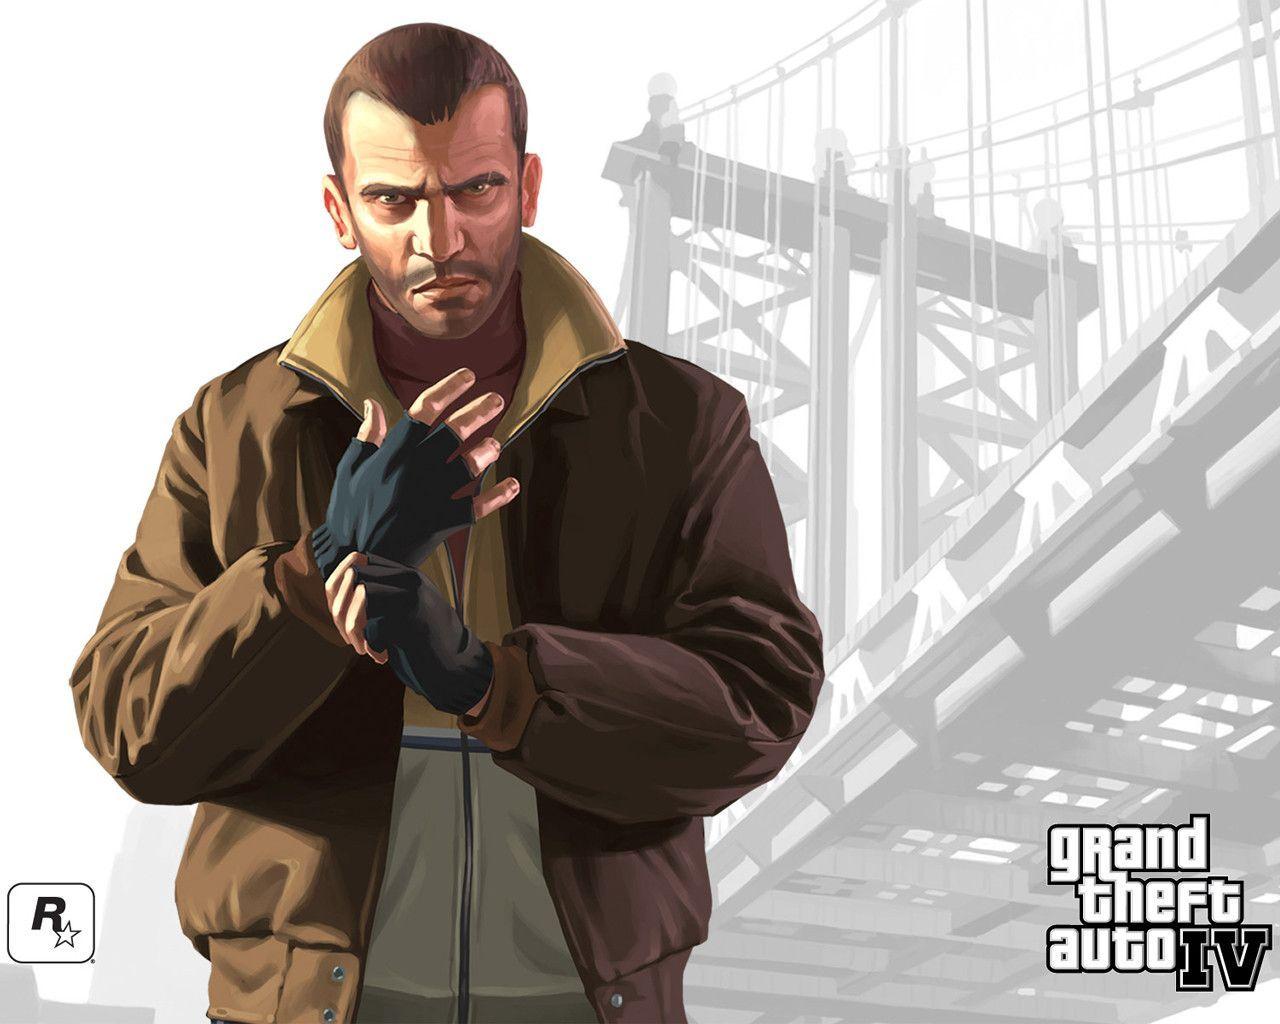 Grand Theft Auto IV Wallpaper. Grand Theft Auto IV Background